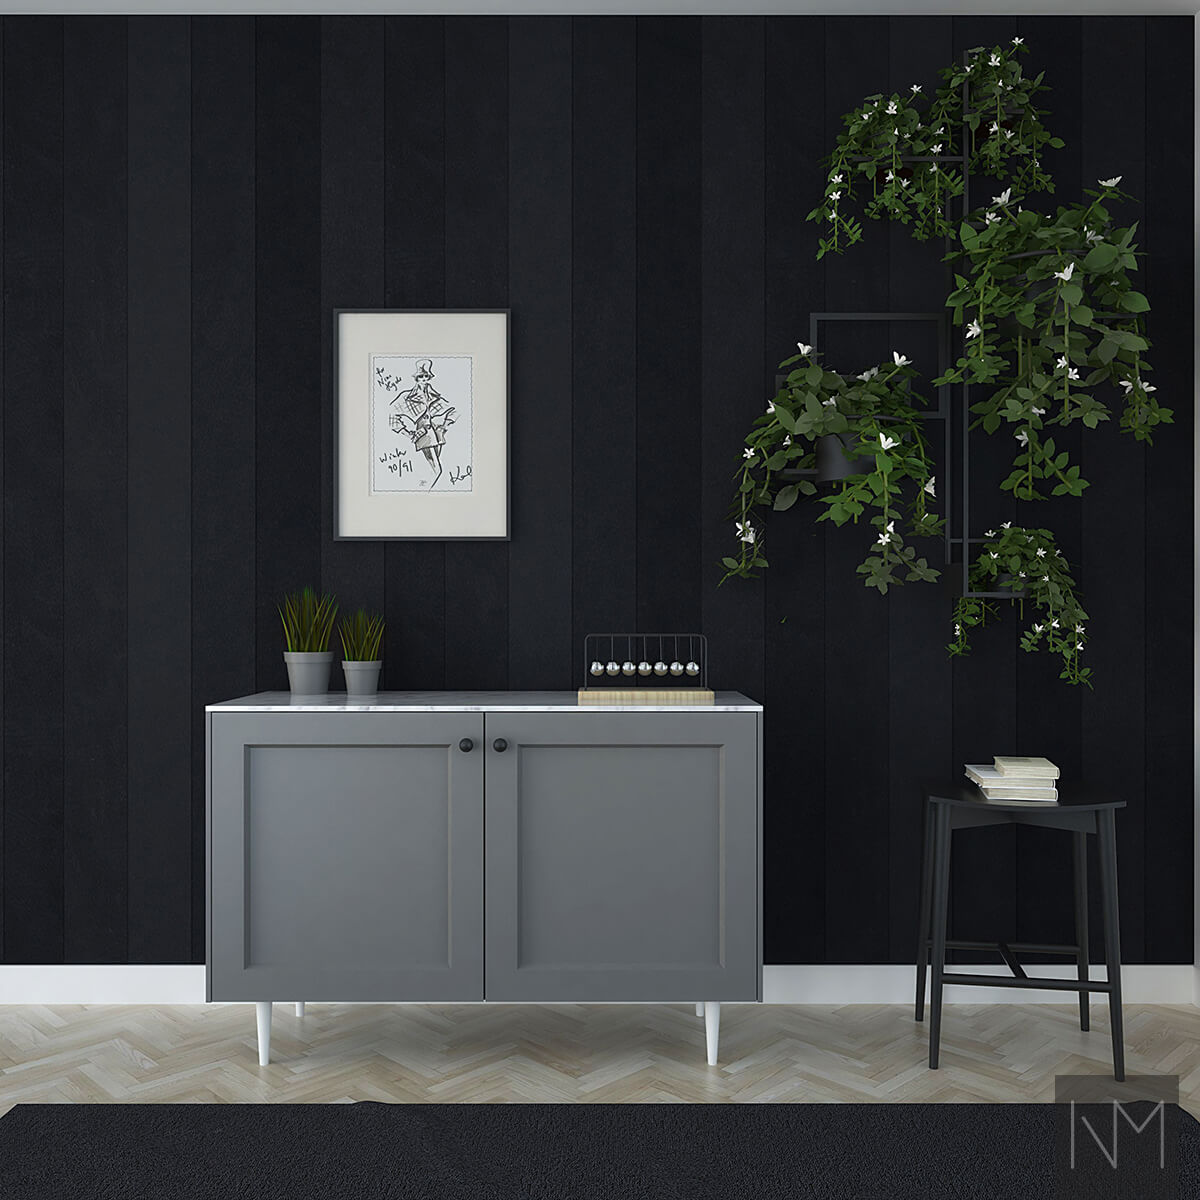 Madia IKEA Besta in design Classic. Colore NCS S6000-N o Matrix 9913.